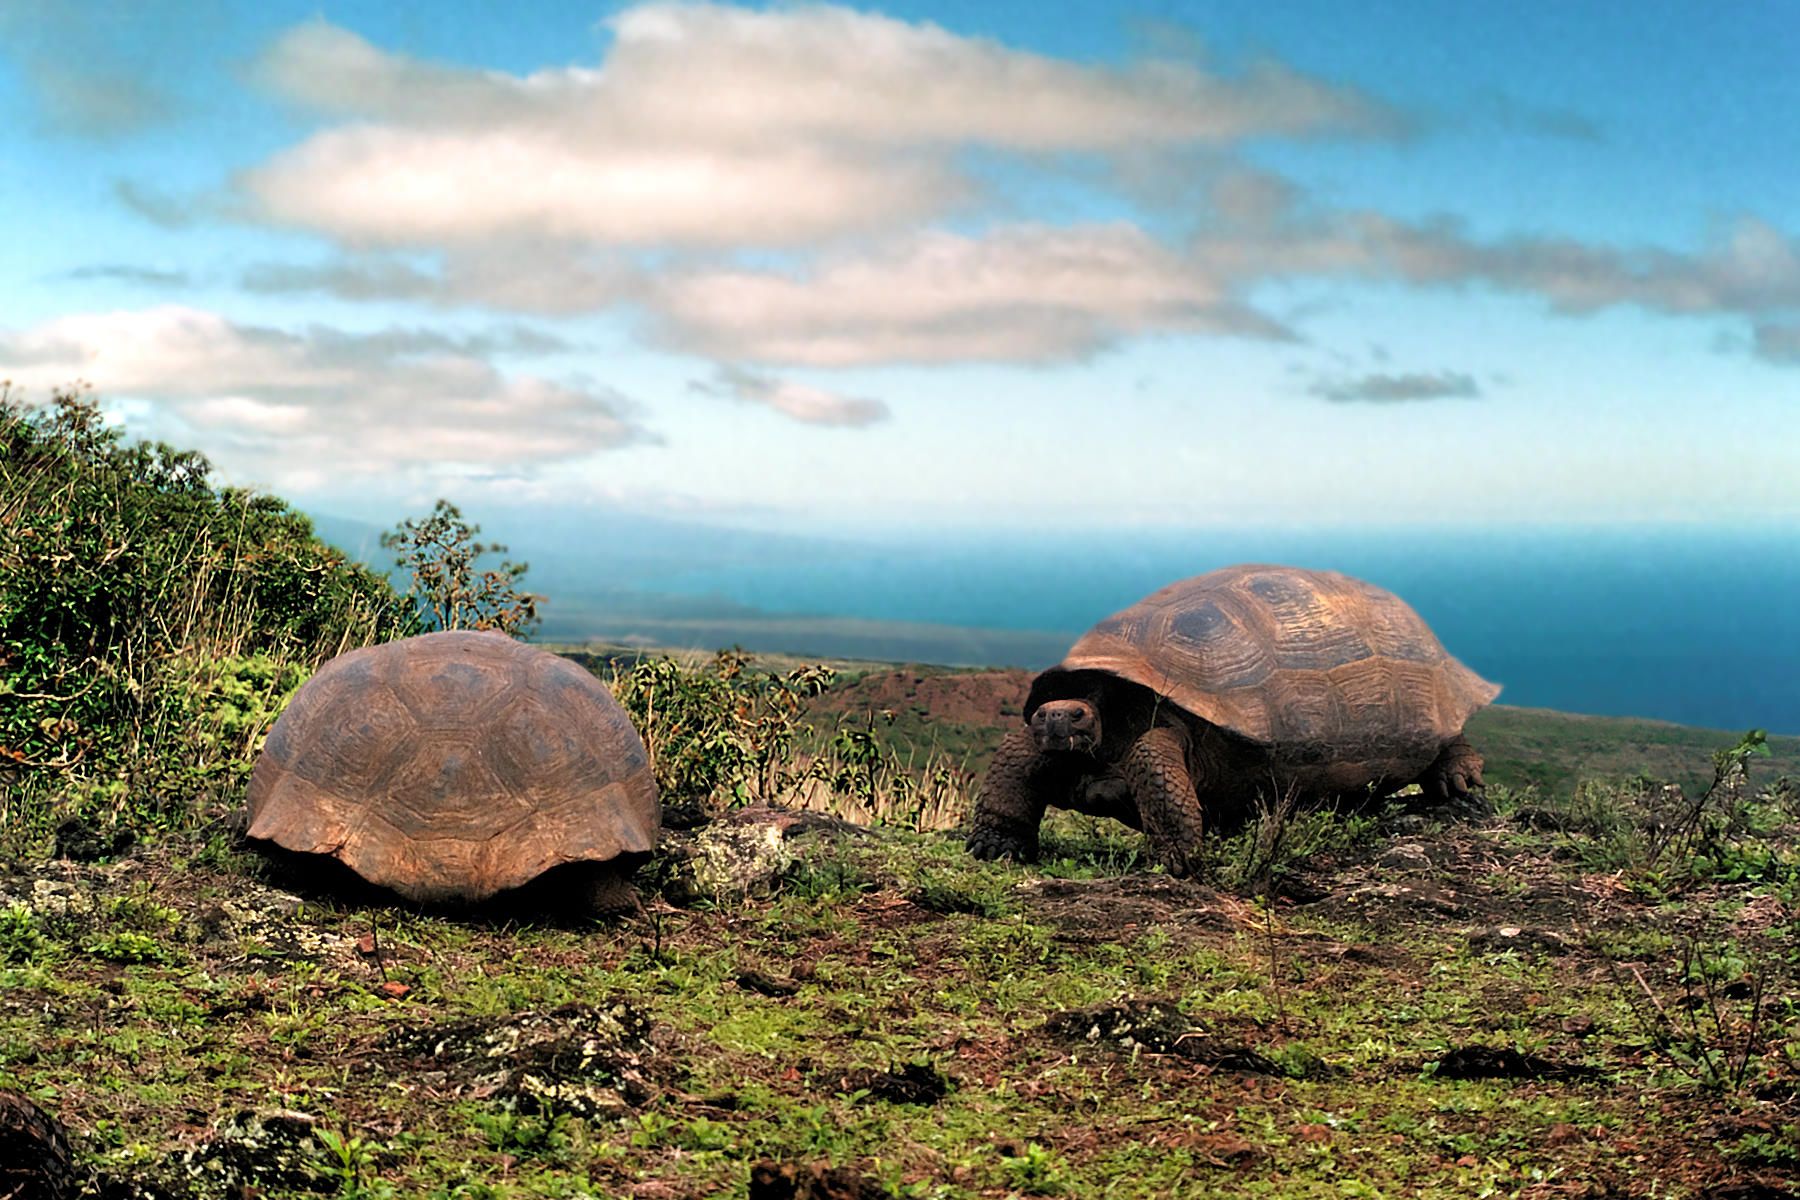 Last turtle. Эквадор Галапагосские острова. Галапагос — Эквадор черепахи. Национальный парк Галапагос Эквадор черепахи. Фауна Эквадора Галапагосские черепахи.